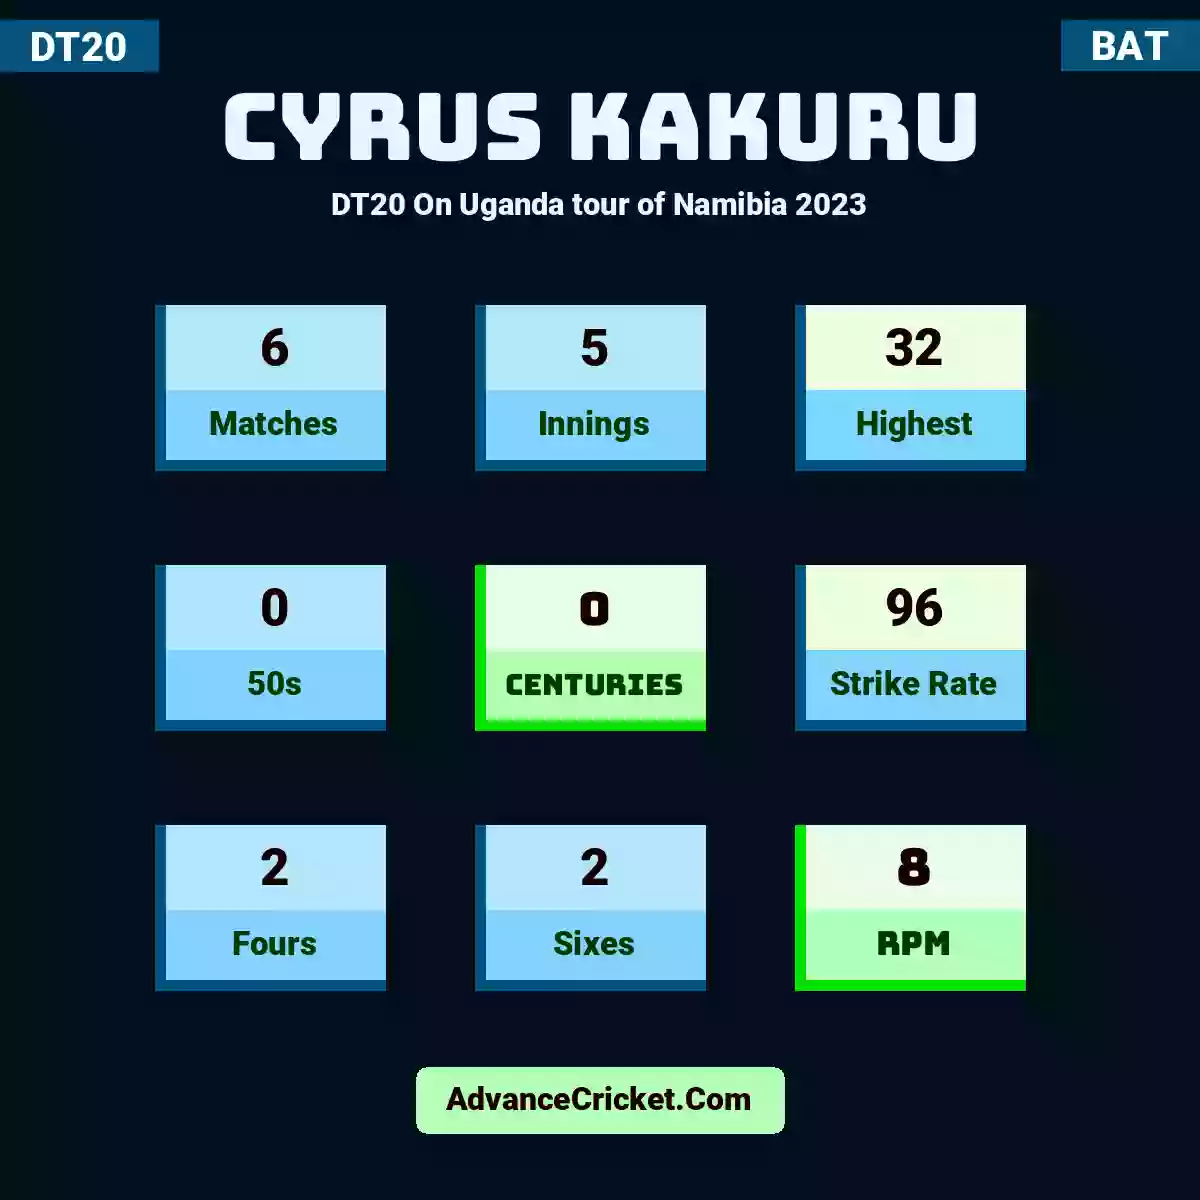 Cyrus Kakuru DT20  On Uganda tour of Namibia 2023, Cyrus Kakuru played 6 matches, scored 32 runs as highest, 0 half-centuries, and 0 centuries, with a strike rate of 96. C.Kakuru hit 2 fours and 2 sixes, with an RPM of 8.